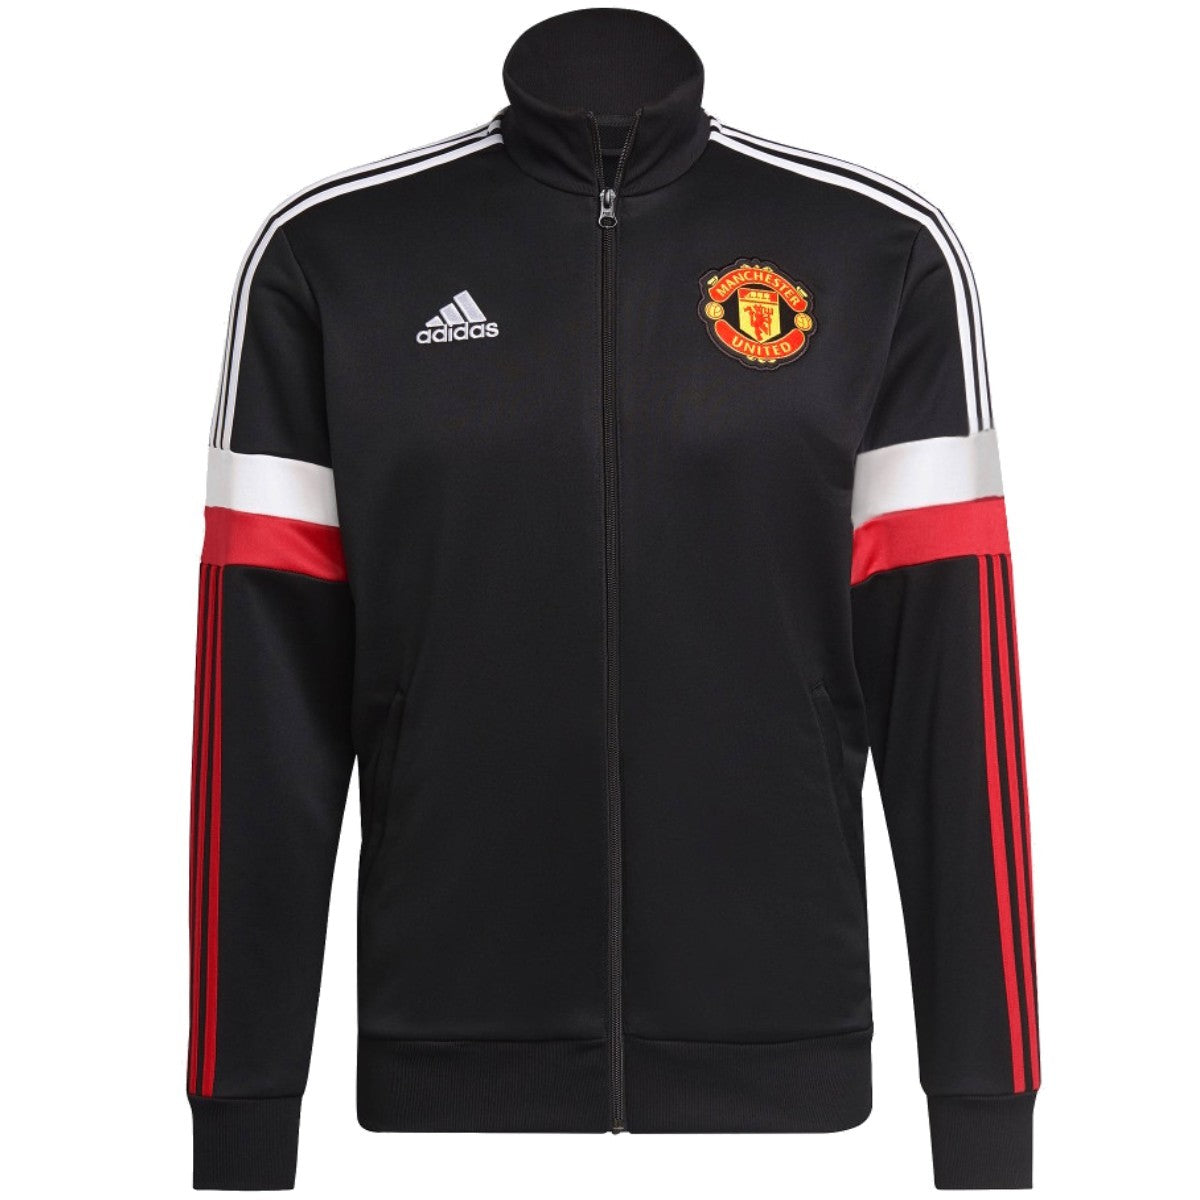 Adidas Manchester United Icon Jacket - Red/Black - Size S